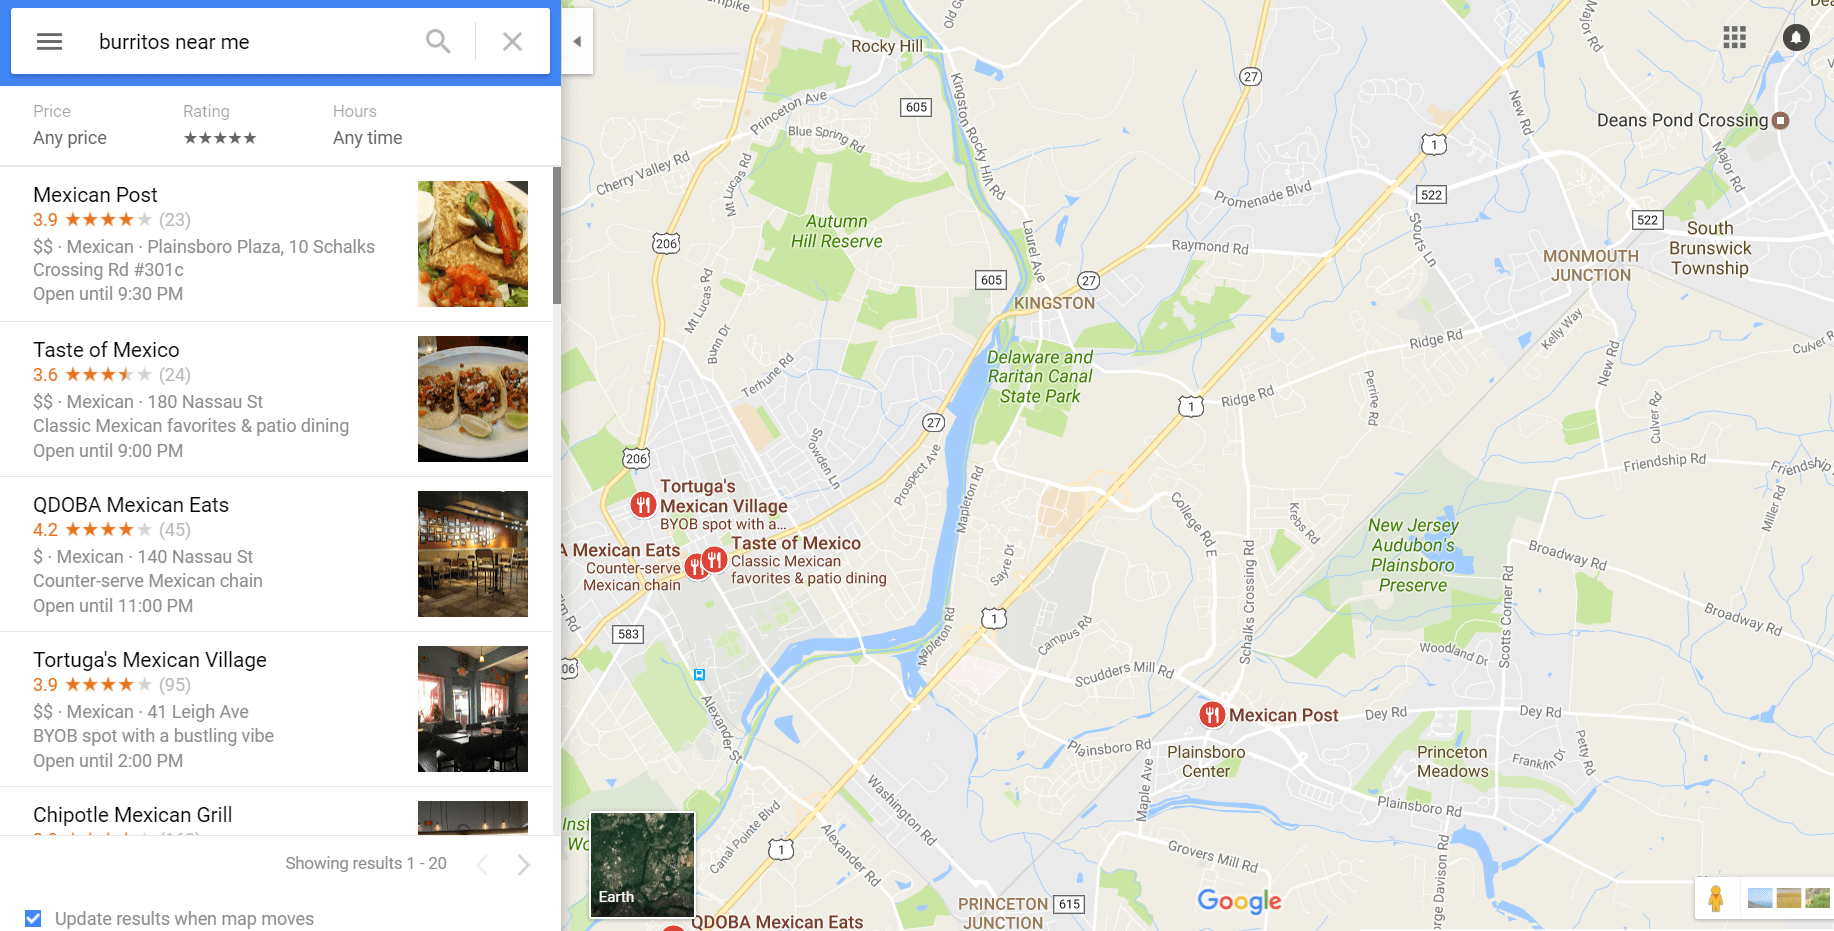 Burritos Near me - Google Maps Search